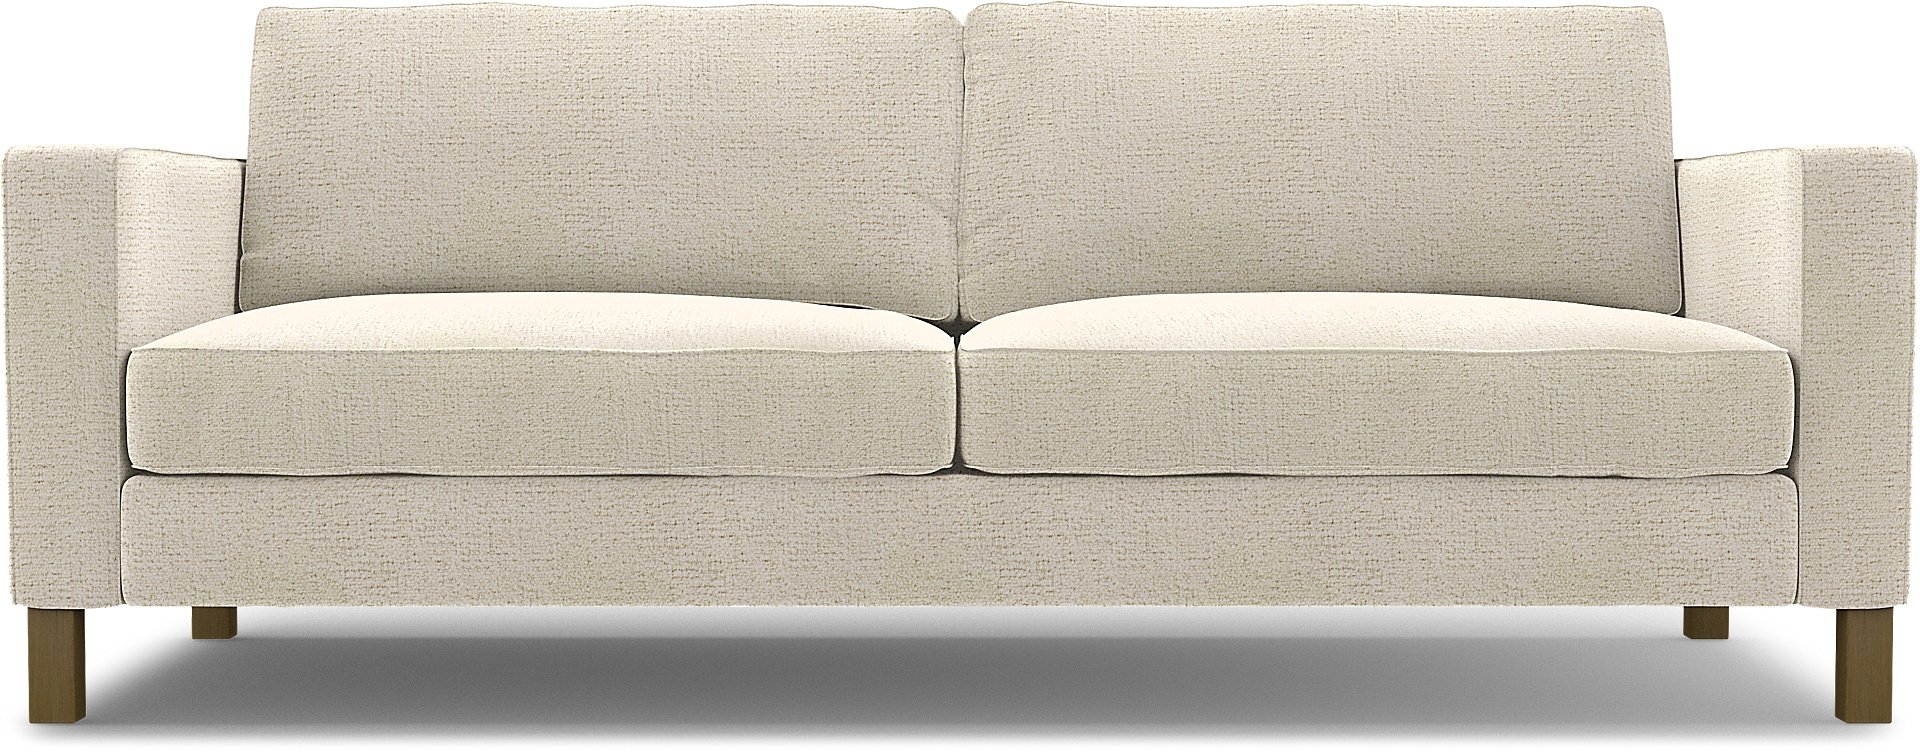 IKEA - Karlstad 3 Seater Sofa Cover, Ecru, Boucle & Texture - Bemz